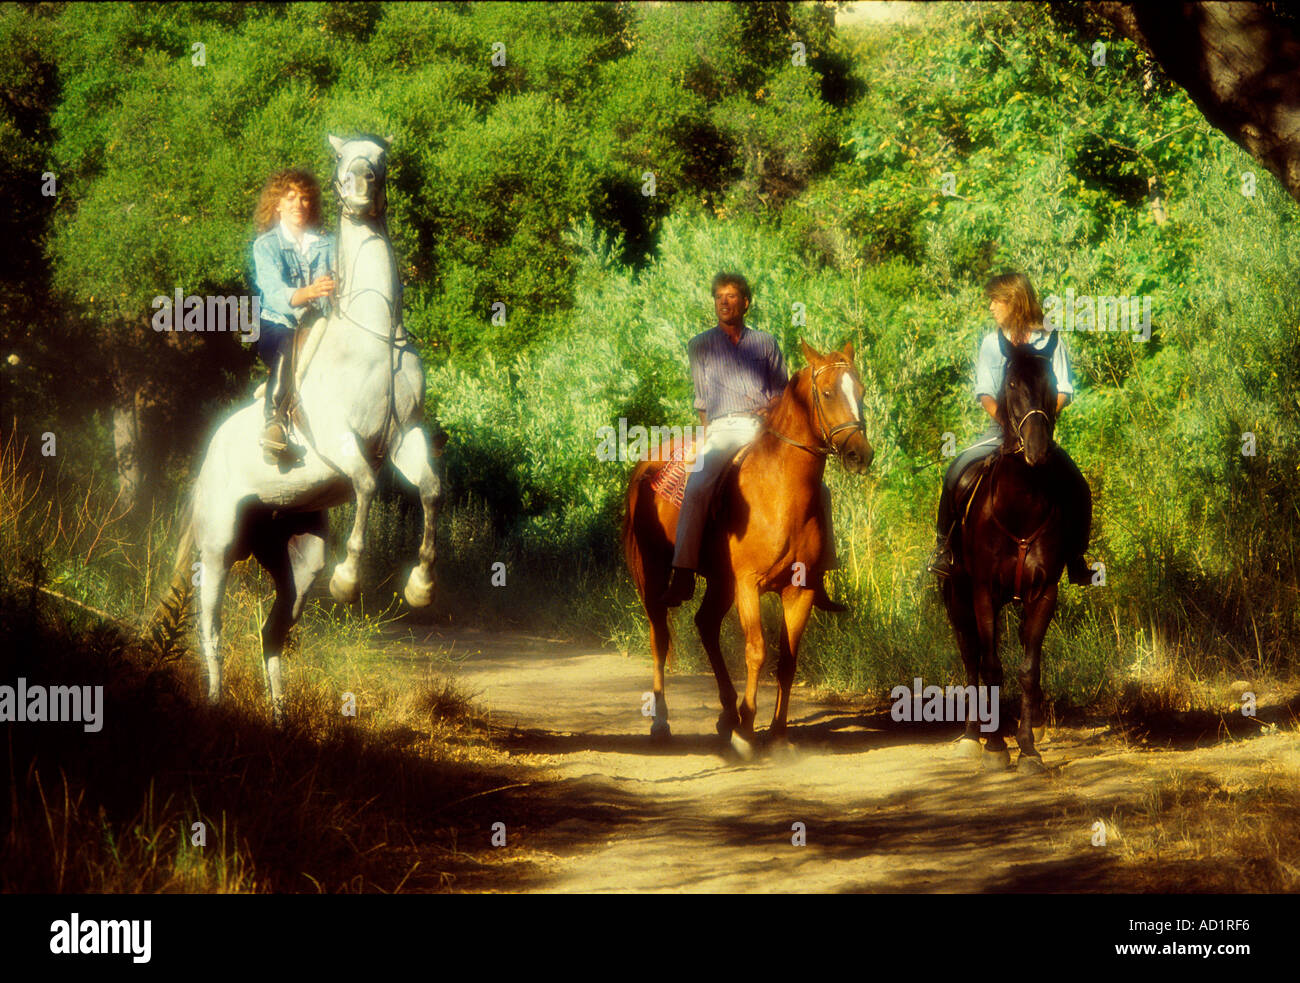 Man Women, woman, 30's three 3 people riders on horseback riding dirt trail. Horse rearing up trees Decker Canyon California Stock Photo